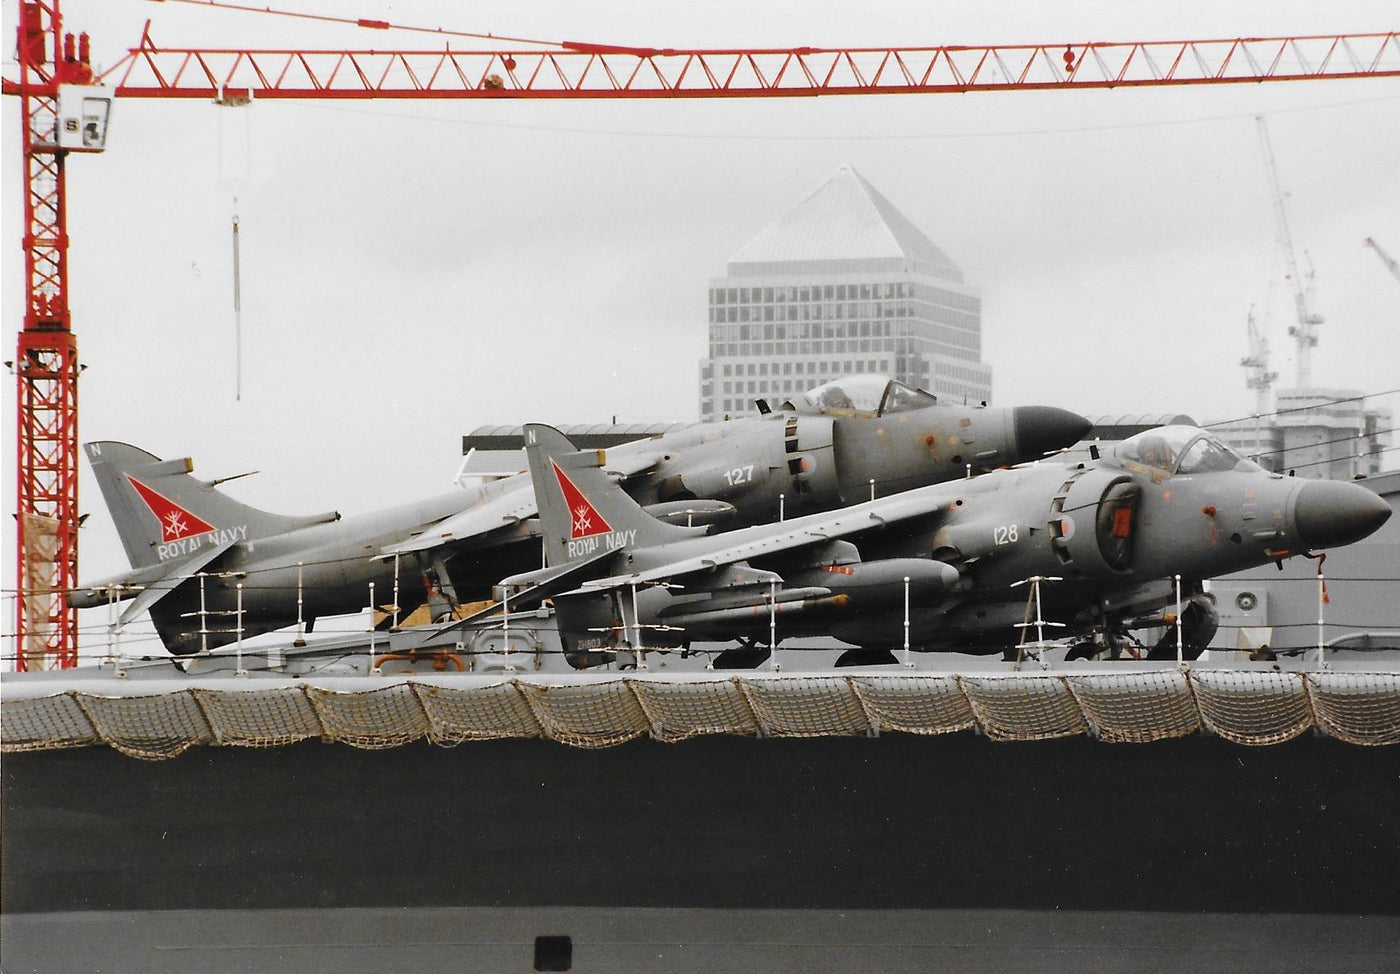 Harrier and Canary Wharf photograph